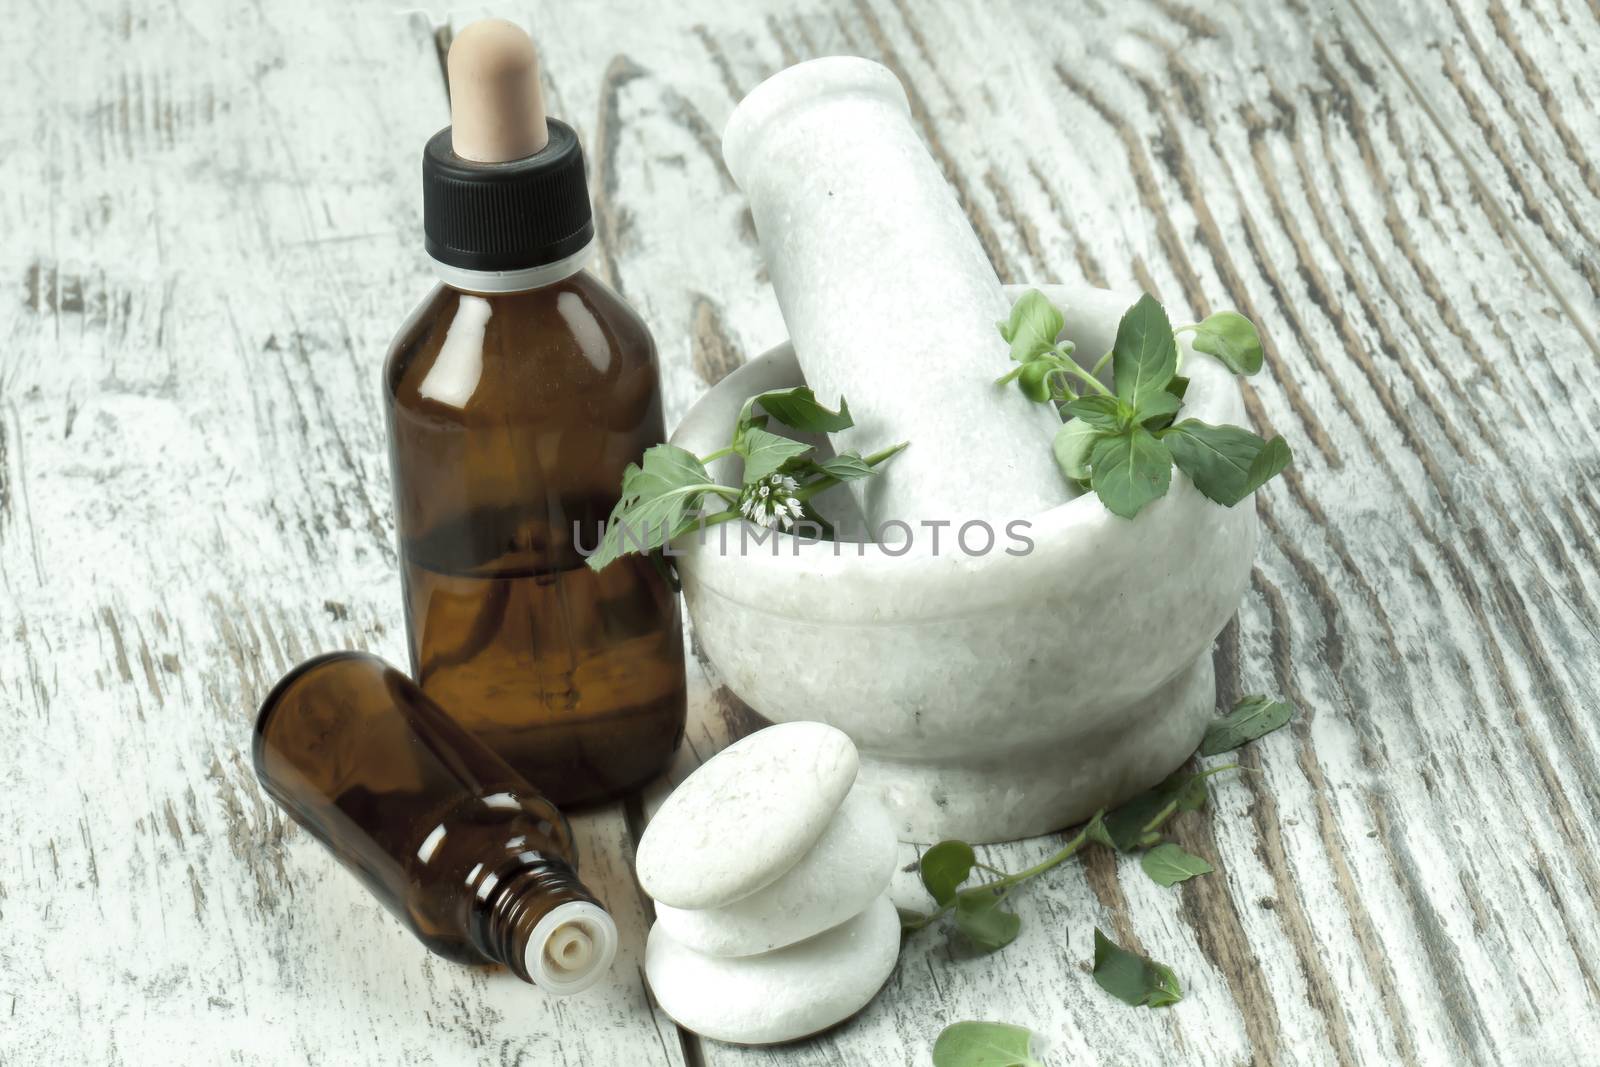 herbal medicine and flower